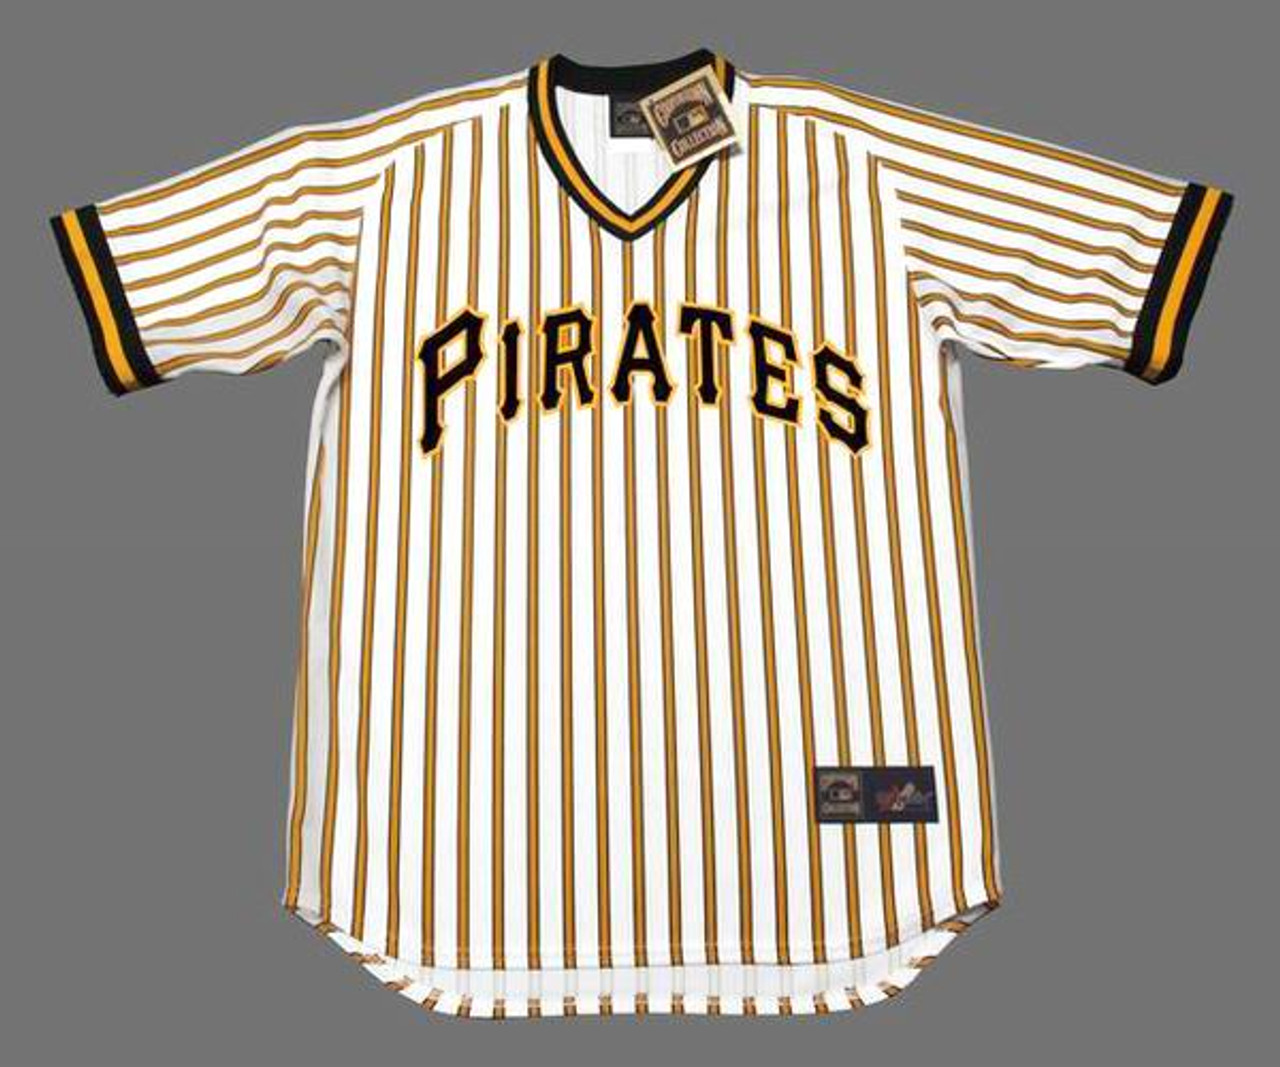 Dock Ellis Jersey - 1979 Pittsburgh Pirates Cooperstown Home Baseball  Throwback Jersey